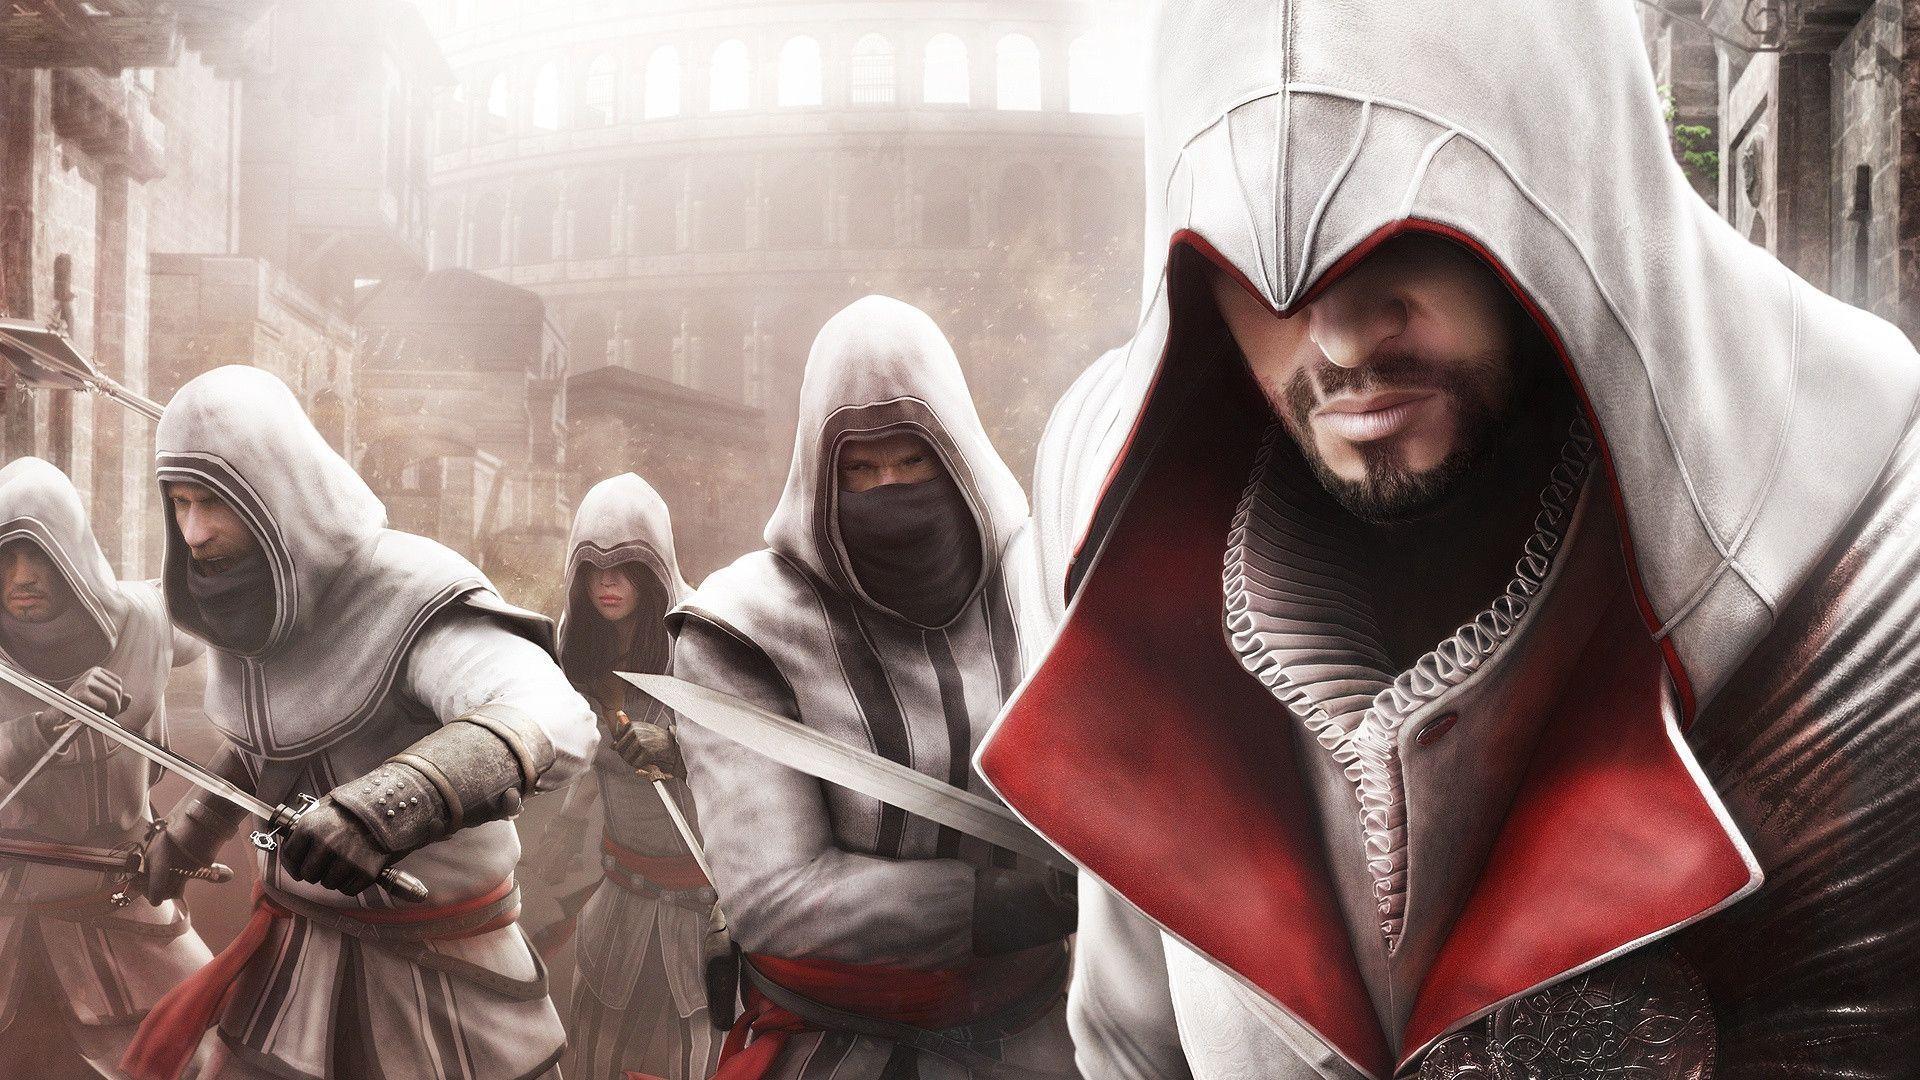 Assassin&;s Creed: Brotherhood Wallpaper. Assassin&;s Creed